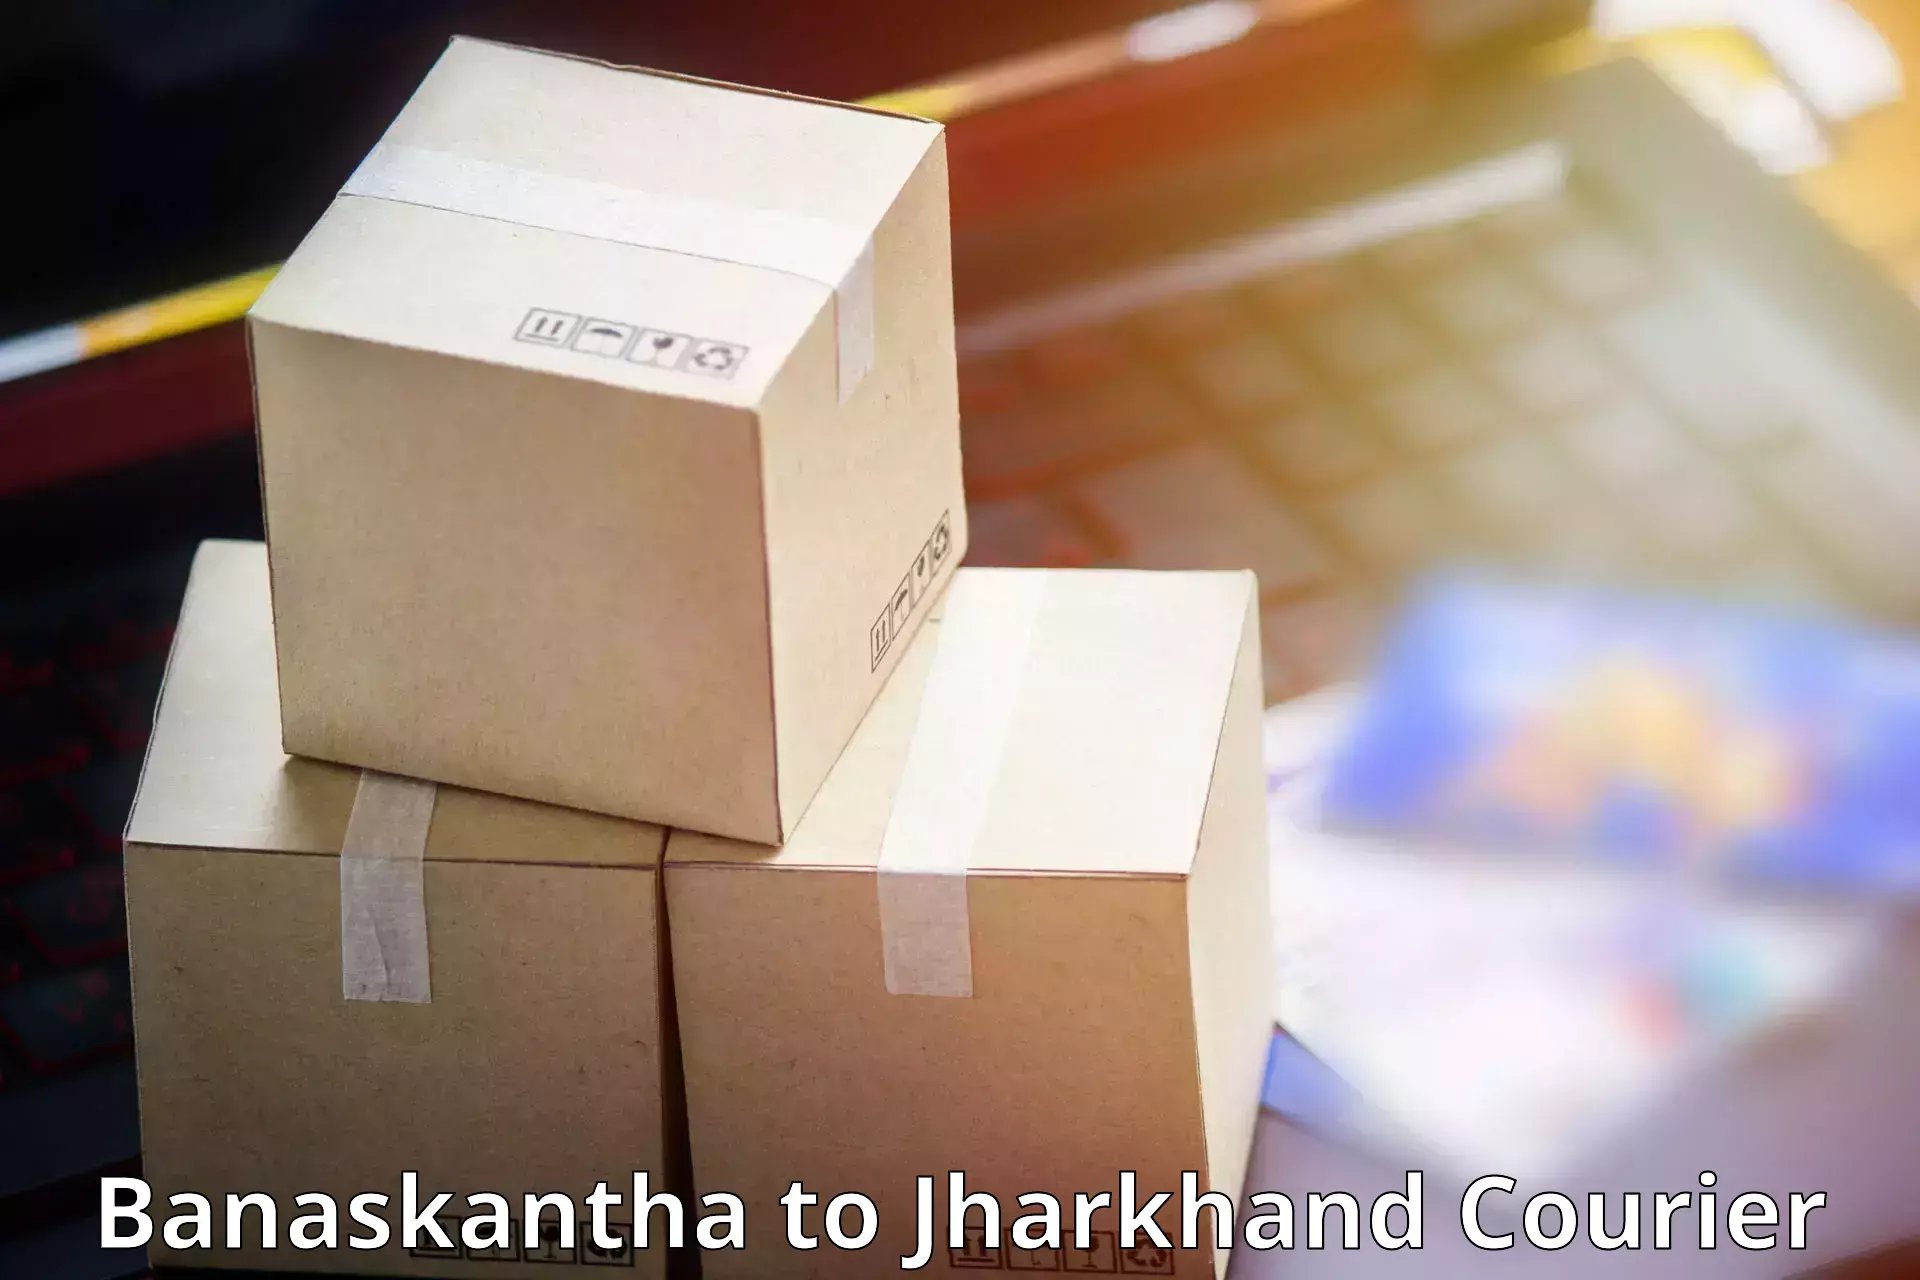 Advanced shipping network Banaskantha to Satbarwa